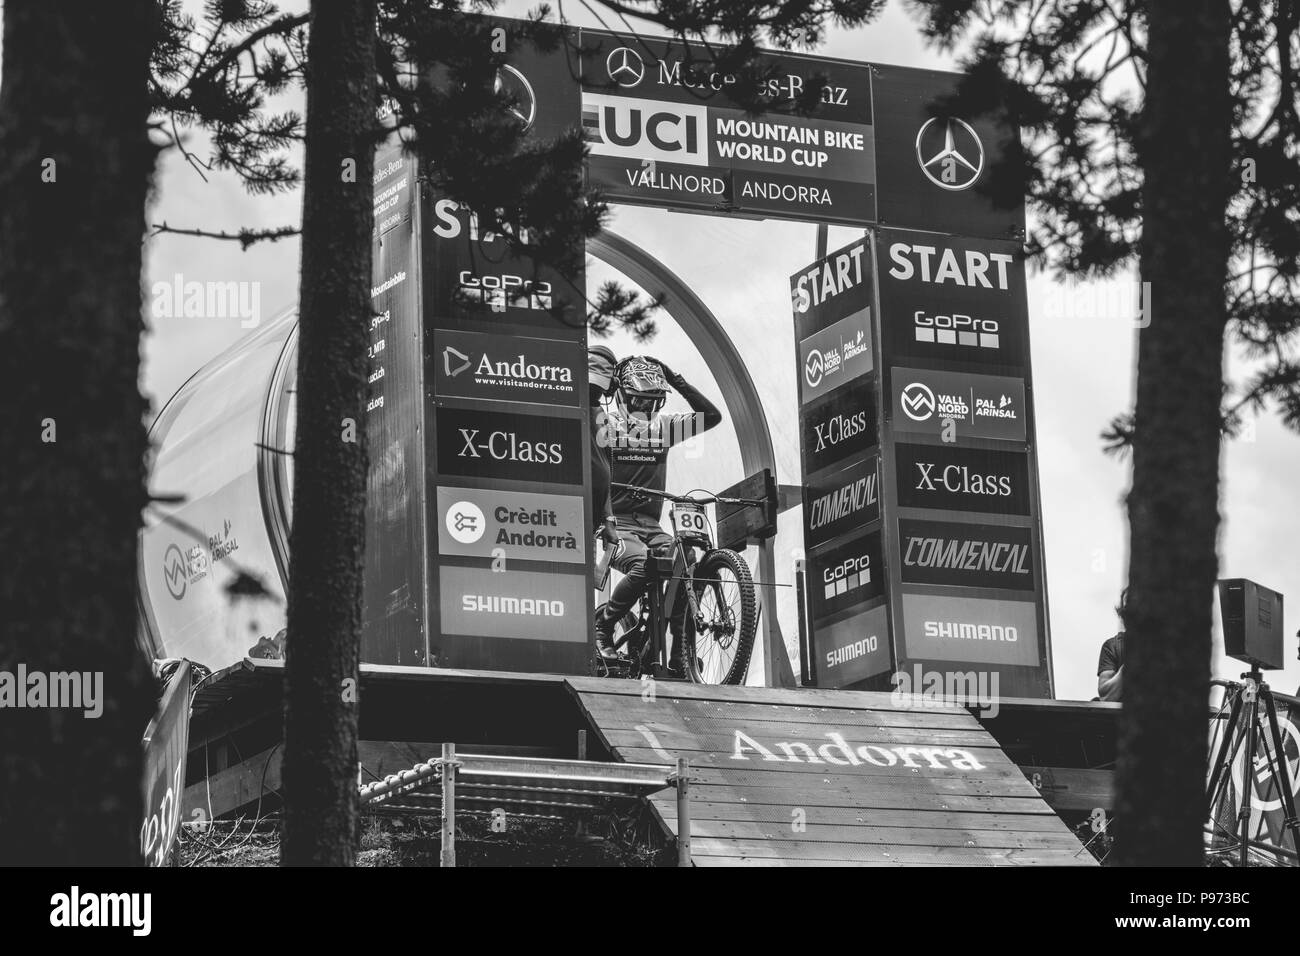 Coupe du Monde UCI 2019 vallnord Andorre Banque D'Images